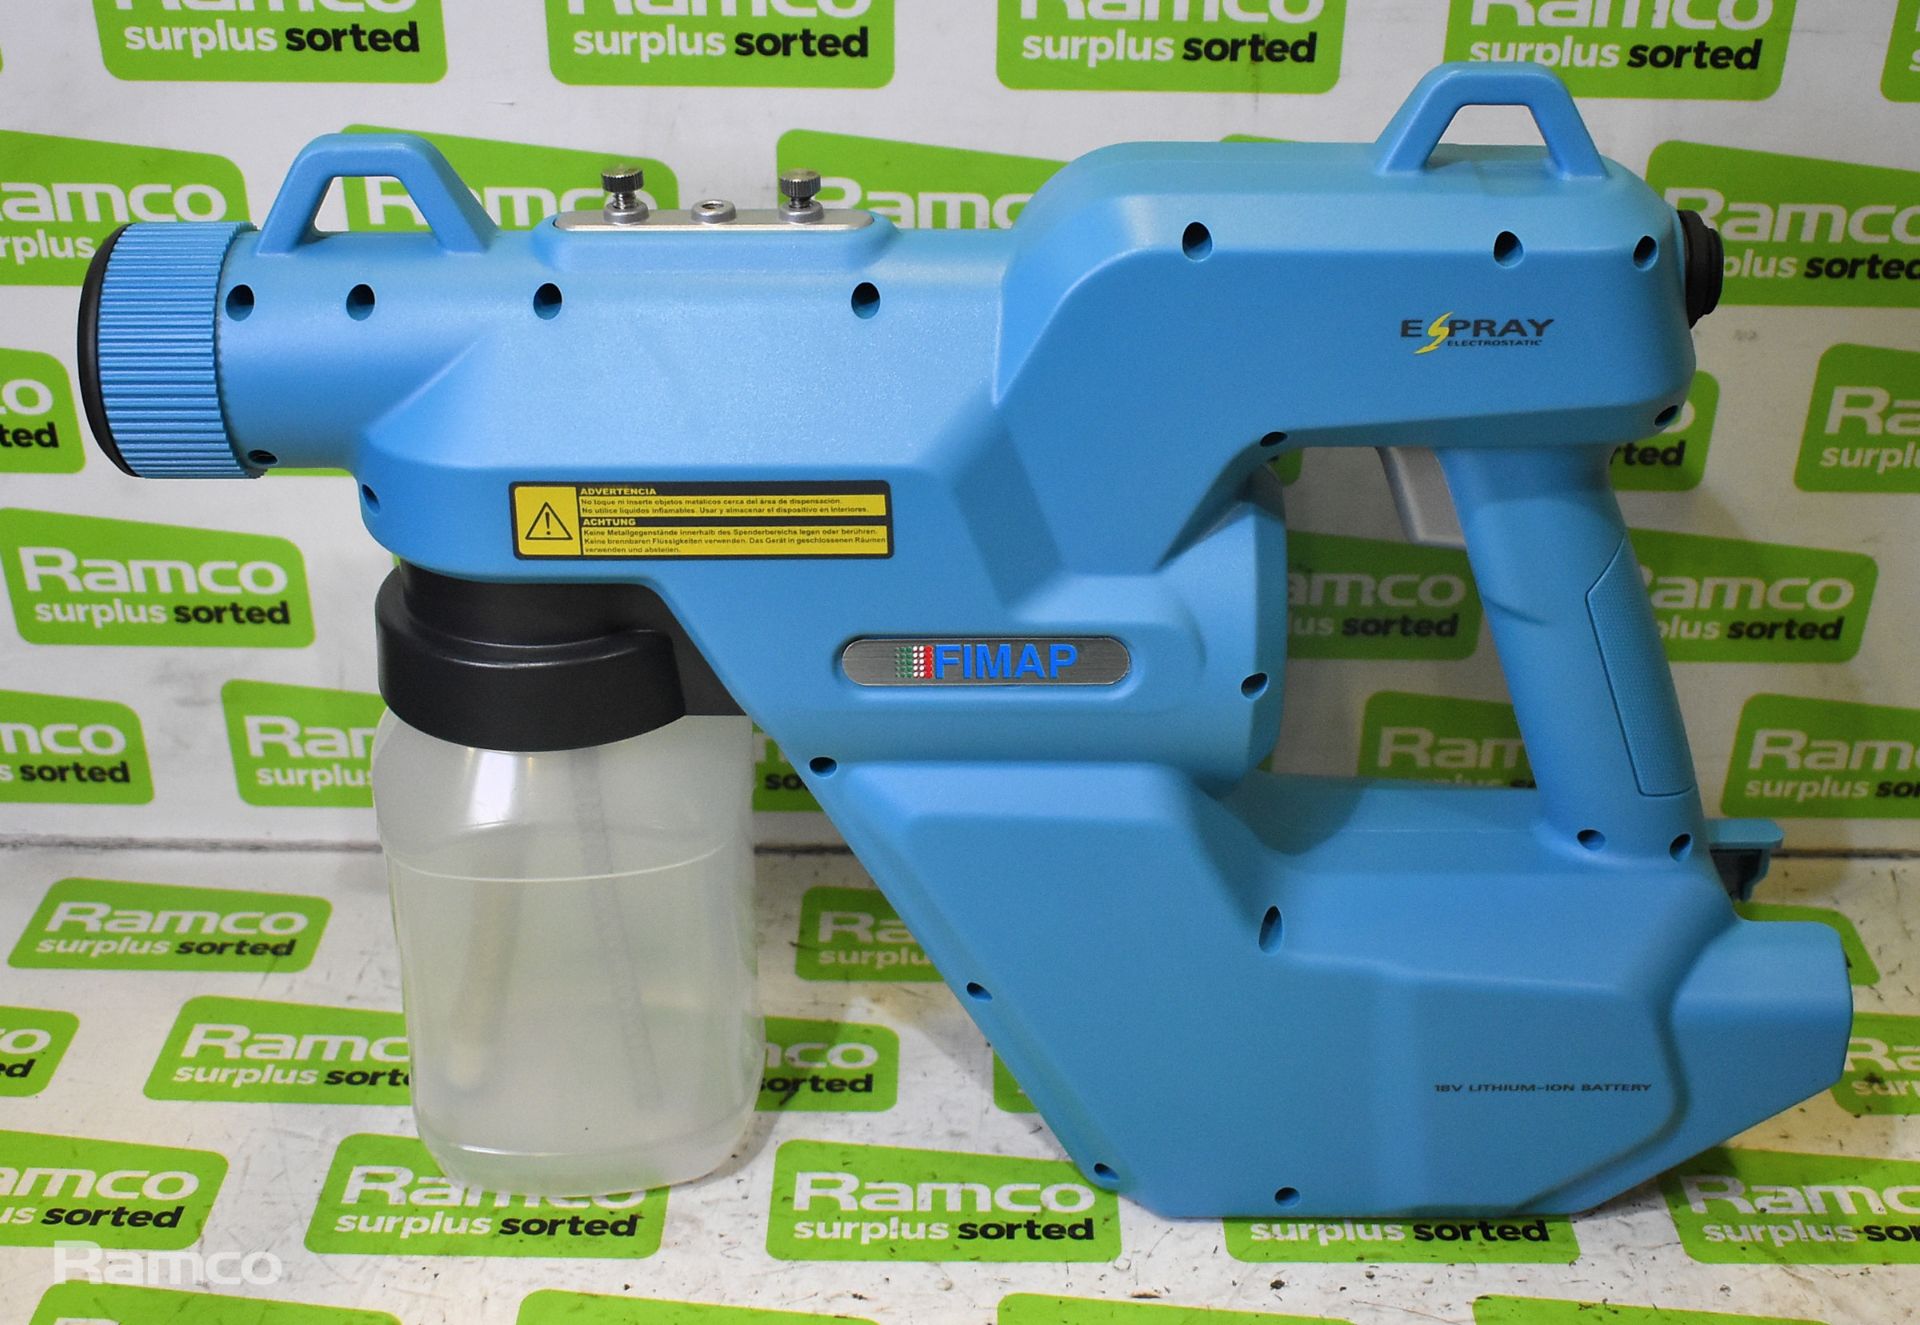 FIMAP E-Spray electrostatic hygienization industrial disinfection gun spray kit - Image 5 of 8